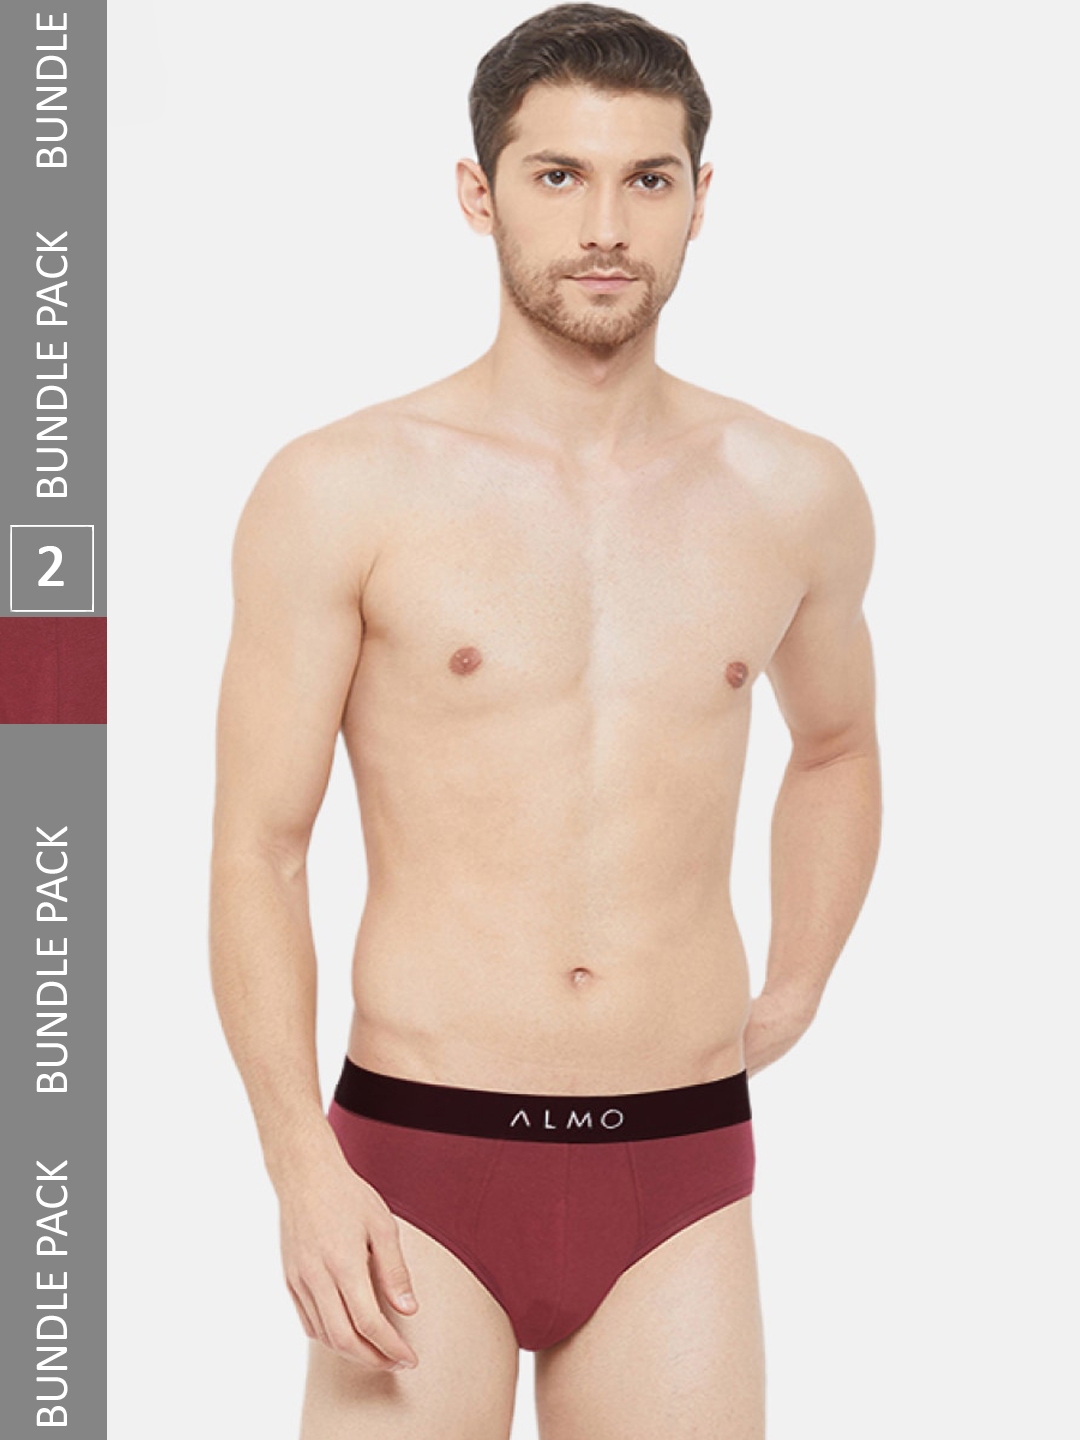 Buy ALMO - Mens Trunks, Micro Modal Underwear for Men